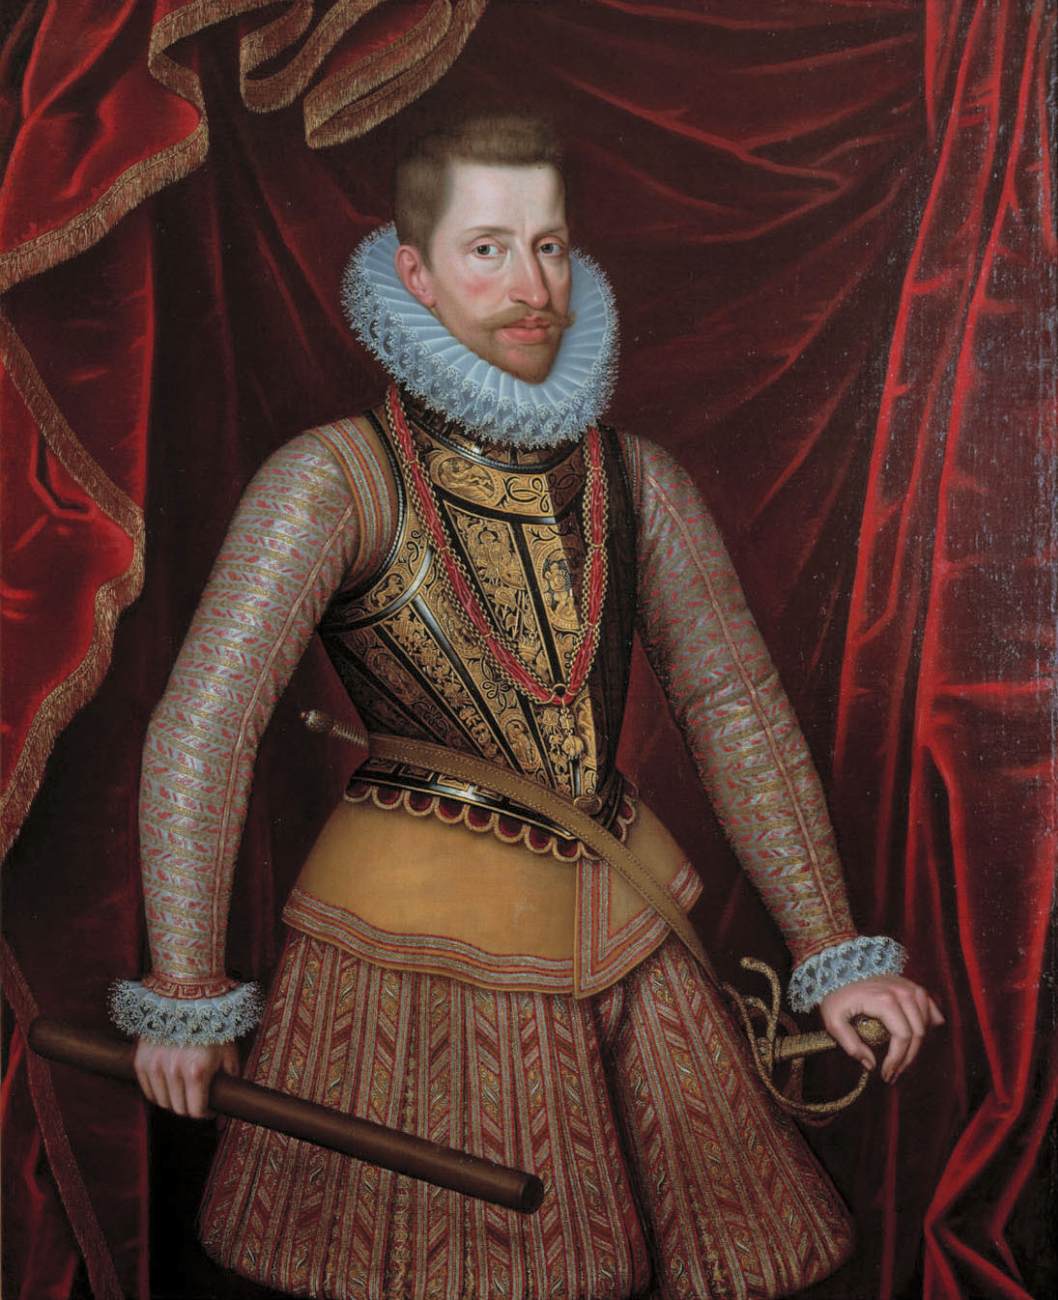 Alberto VII, Archiduque de Austria